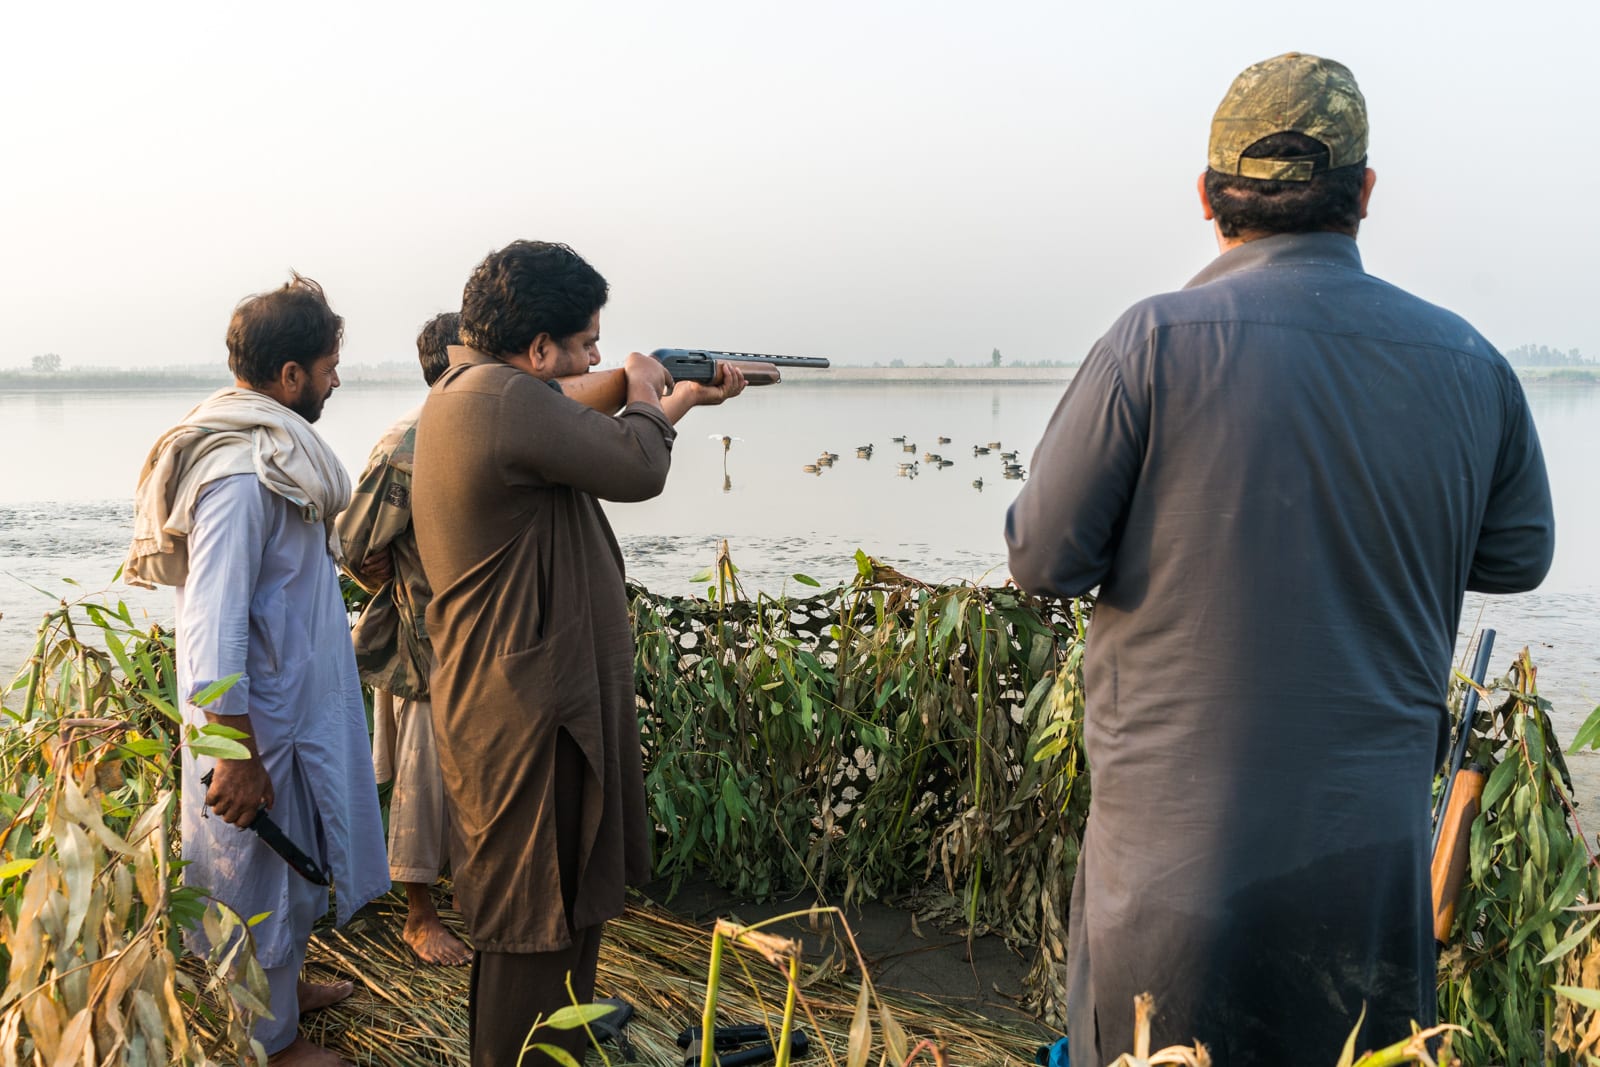 Pakistan bucket list - Duck hunting in Mardan - Lost With Purpose travel blog